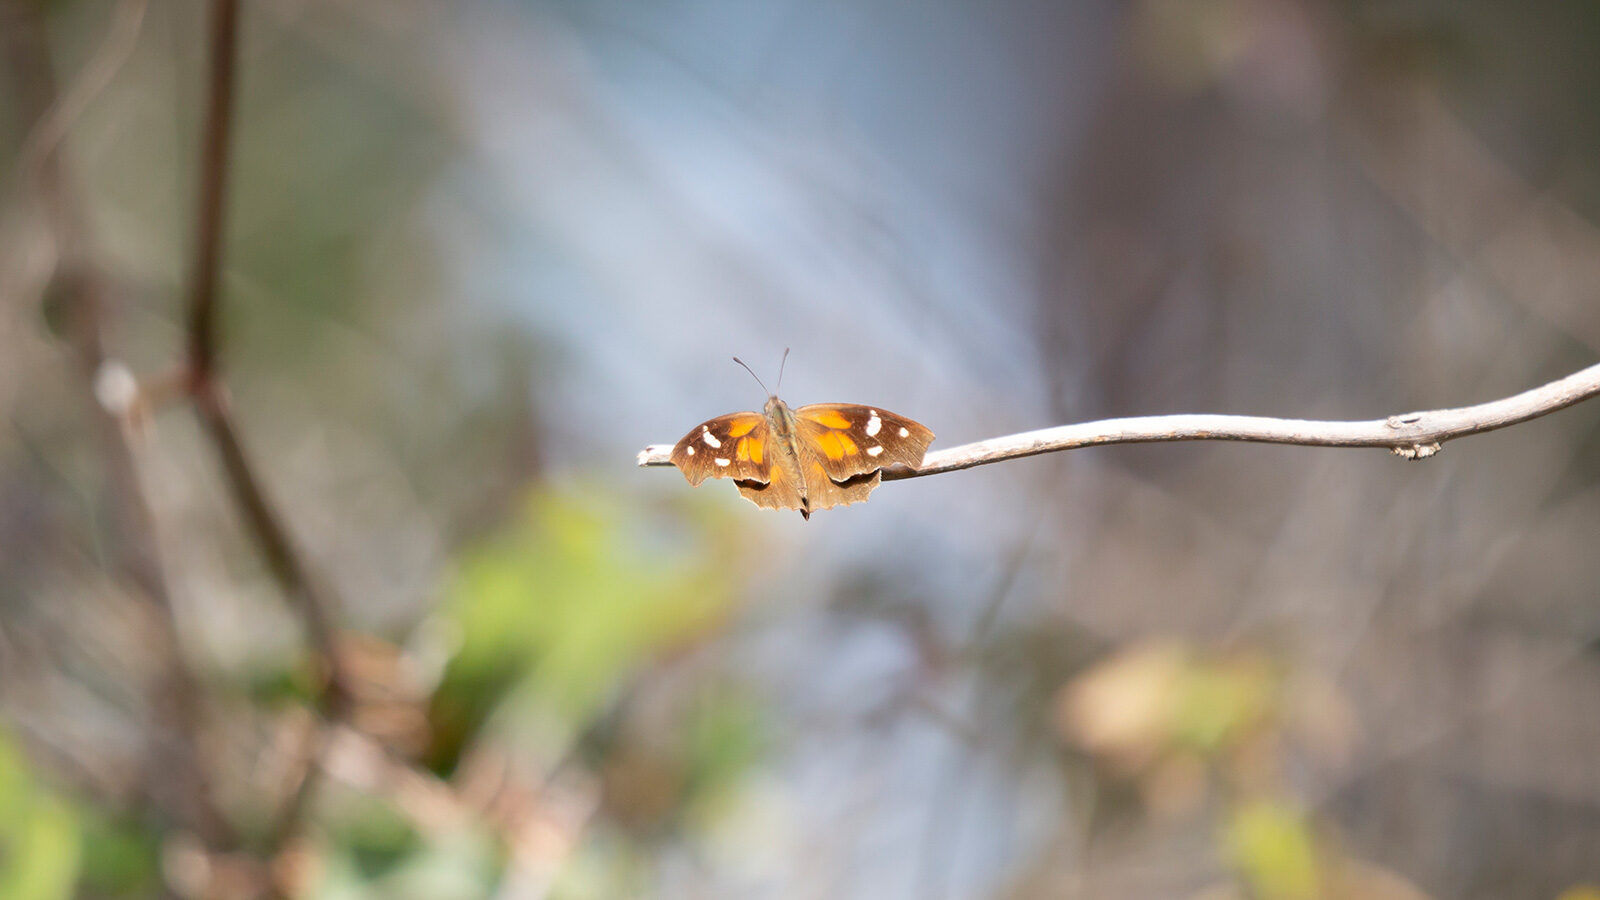 American snout butterfly on a bare bush branch